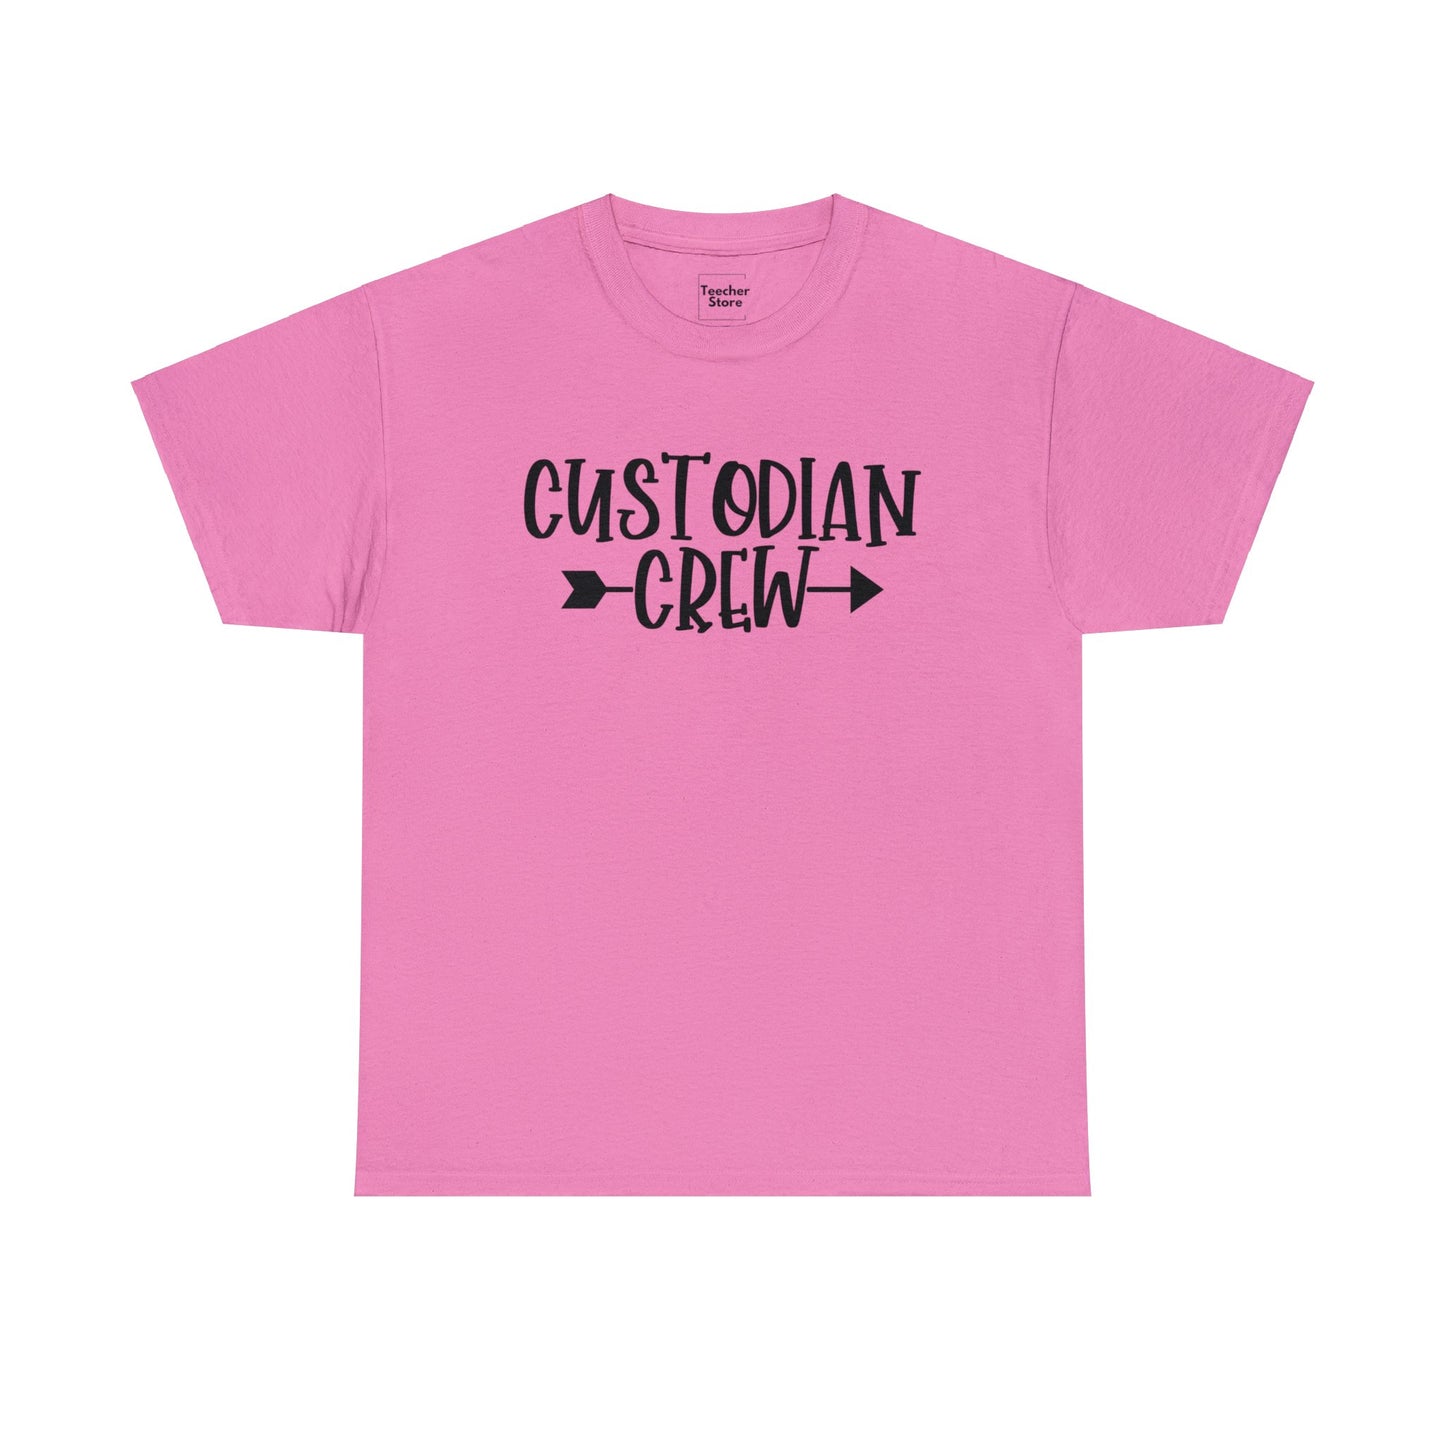 Custodian Crew Tee-Shirt